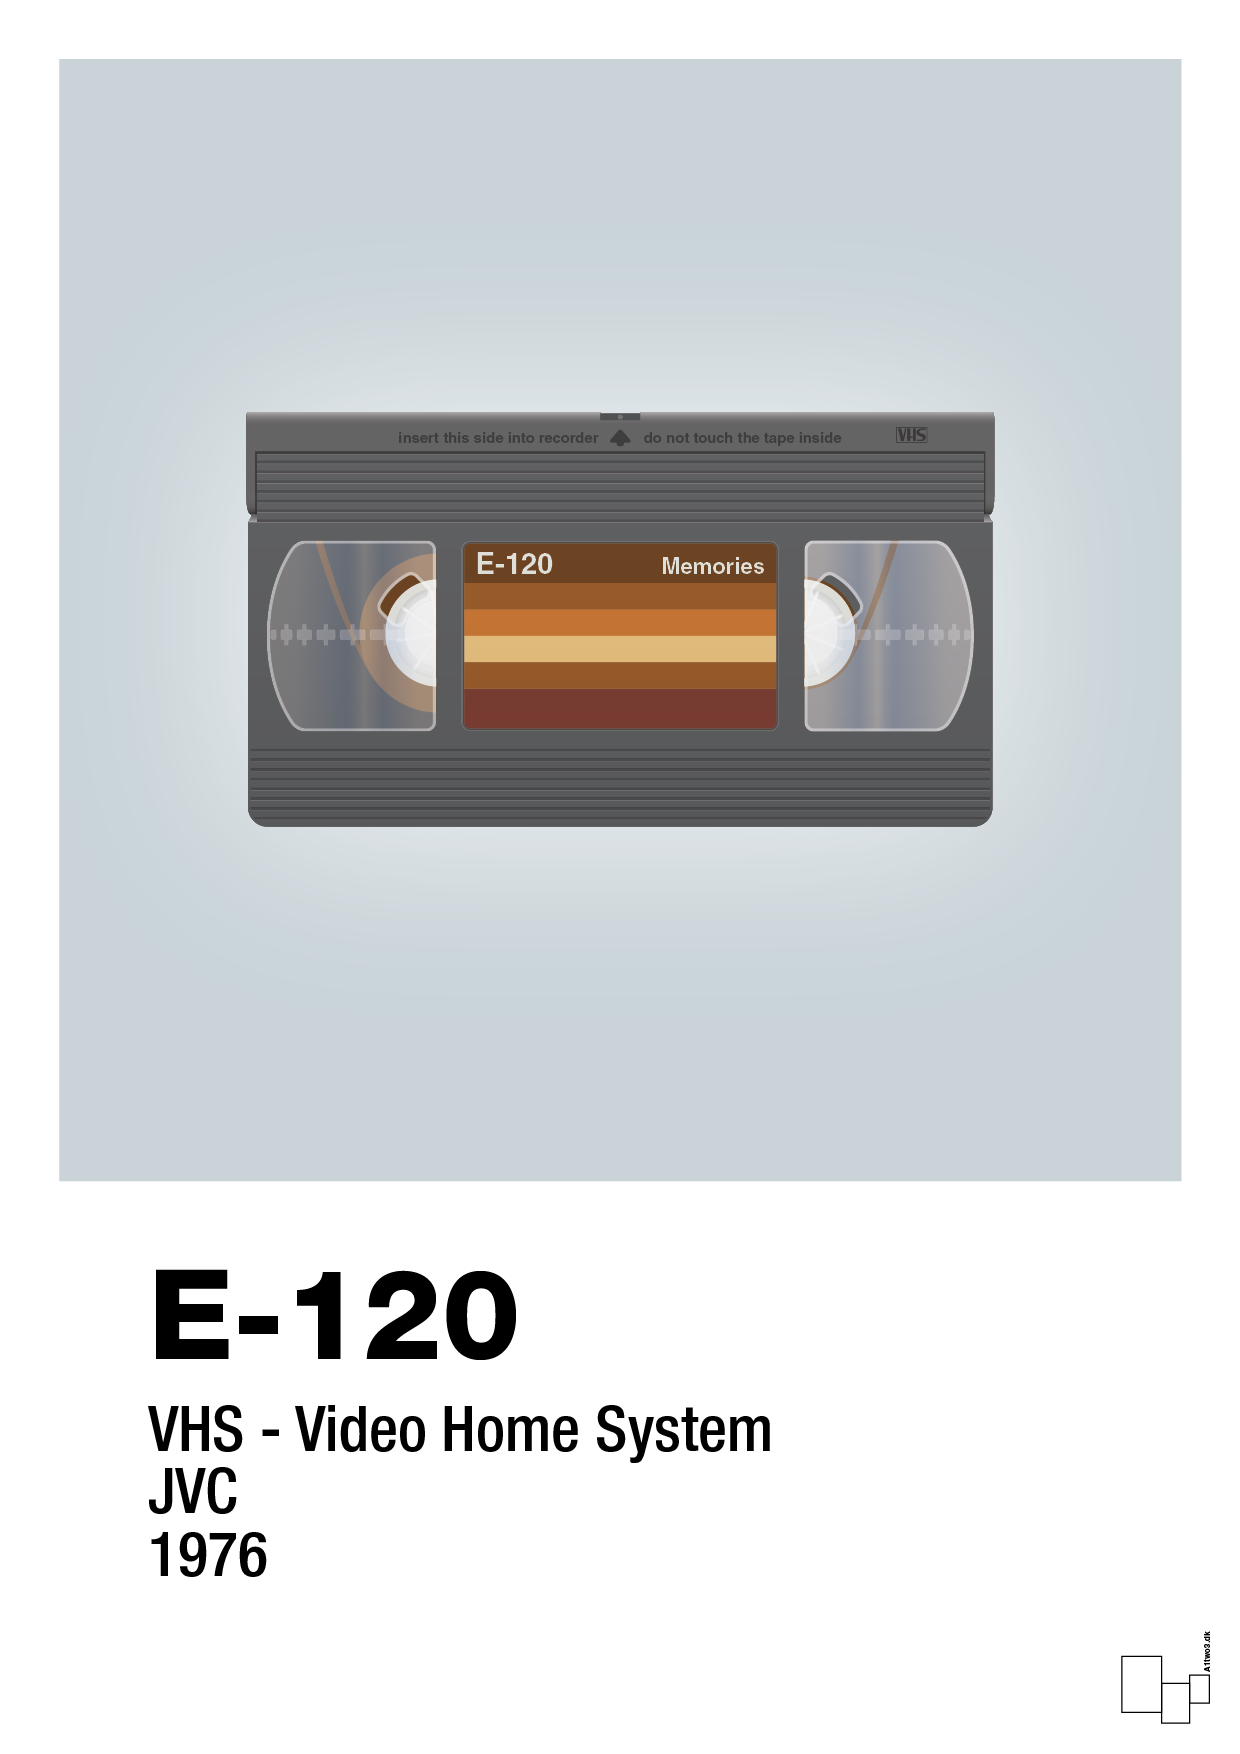 videobånd e-120 - Plakat med Grafik i Light Drizzle